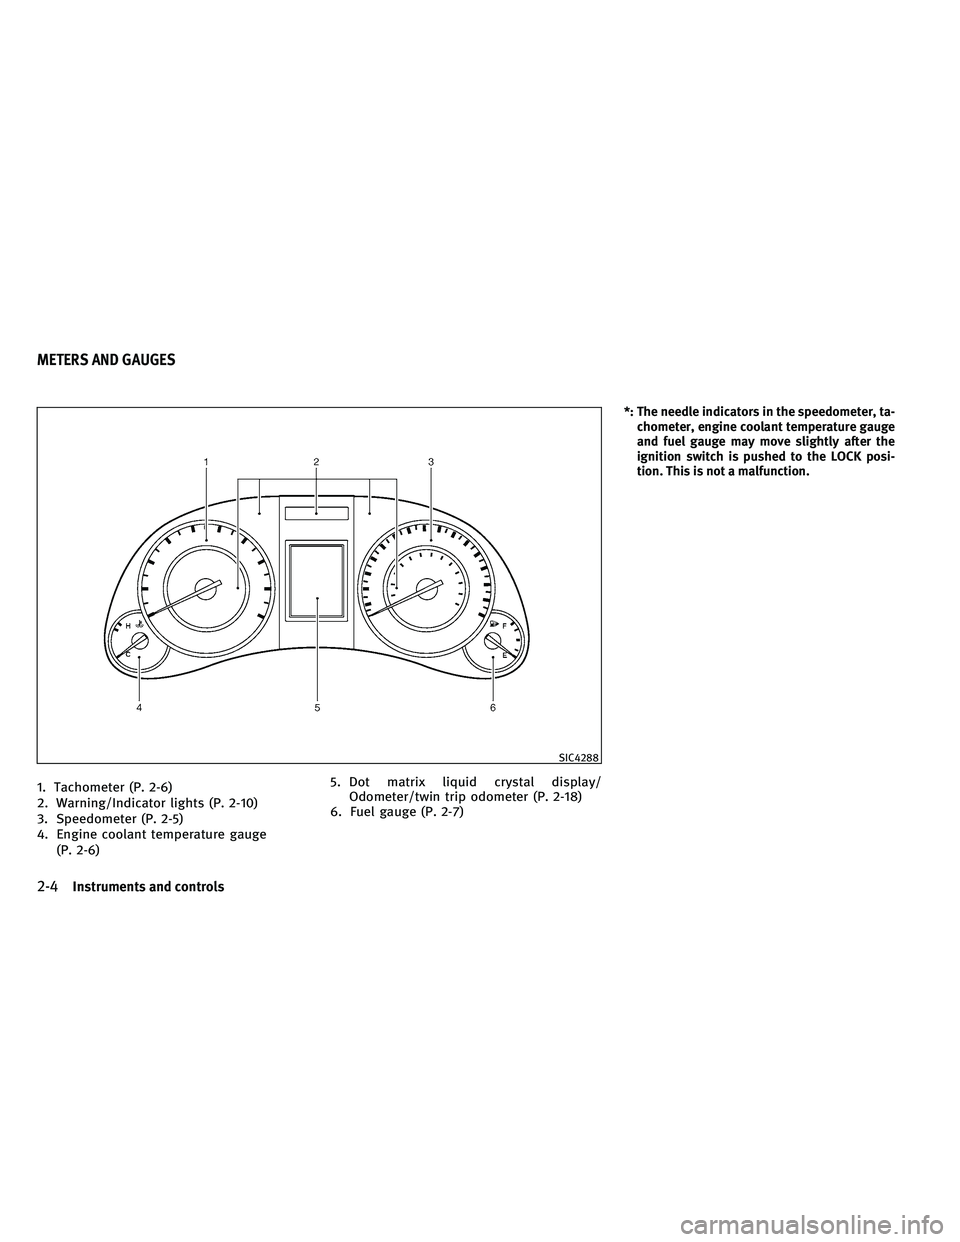 INFINITI G 2011  Owners Manual 1. Tachometer (P. 2-6)
2. Warning/Indicator lights (P. 2-10)
3. Speedometer (P. 2-5)
4. Engine coolant temperature gauge(P. 2-6) 5. Dot matrix liquid crystal display/
Odometer/twin trip odometer (P. 2